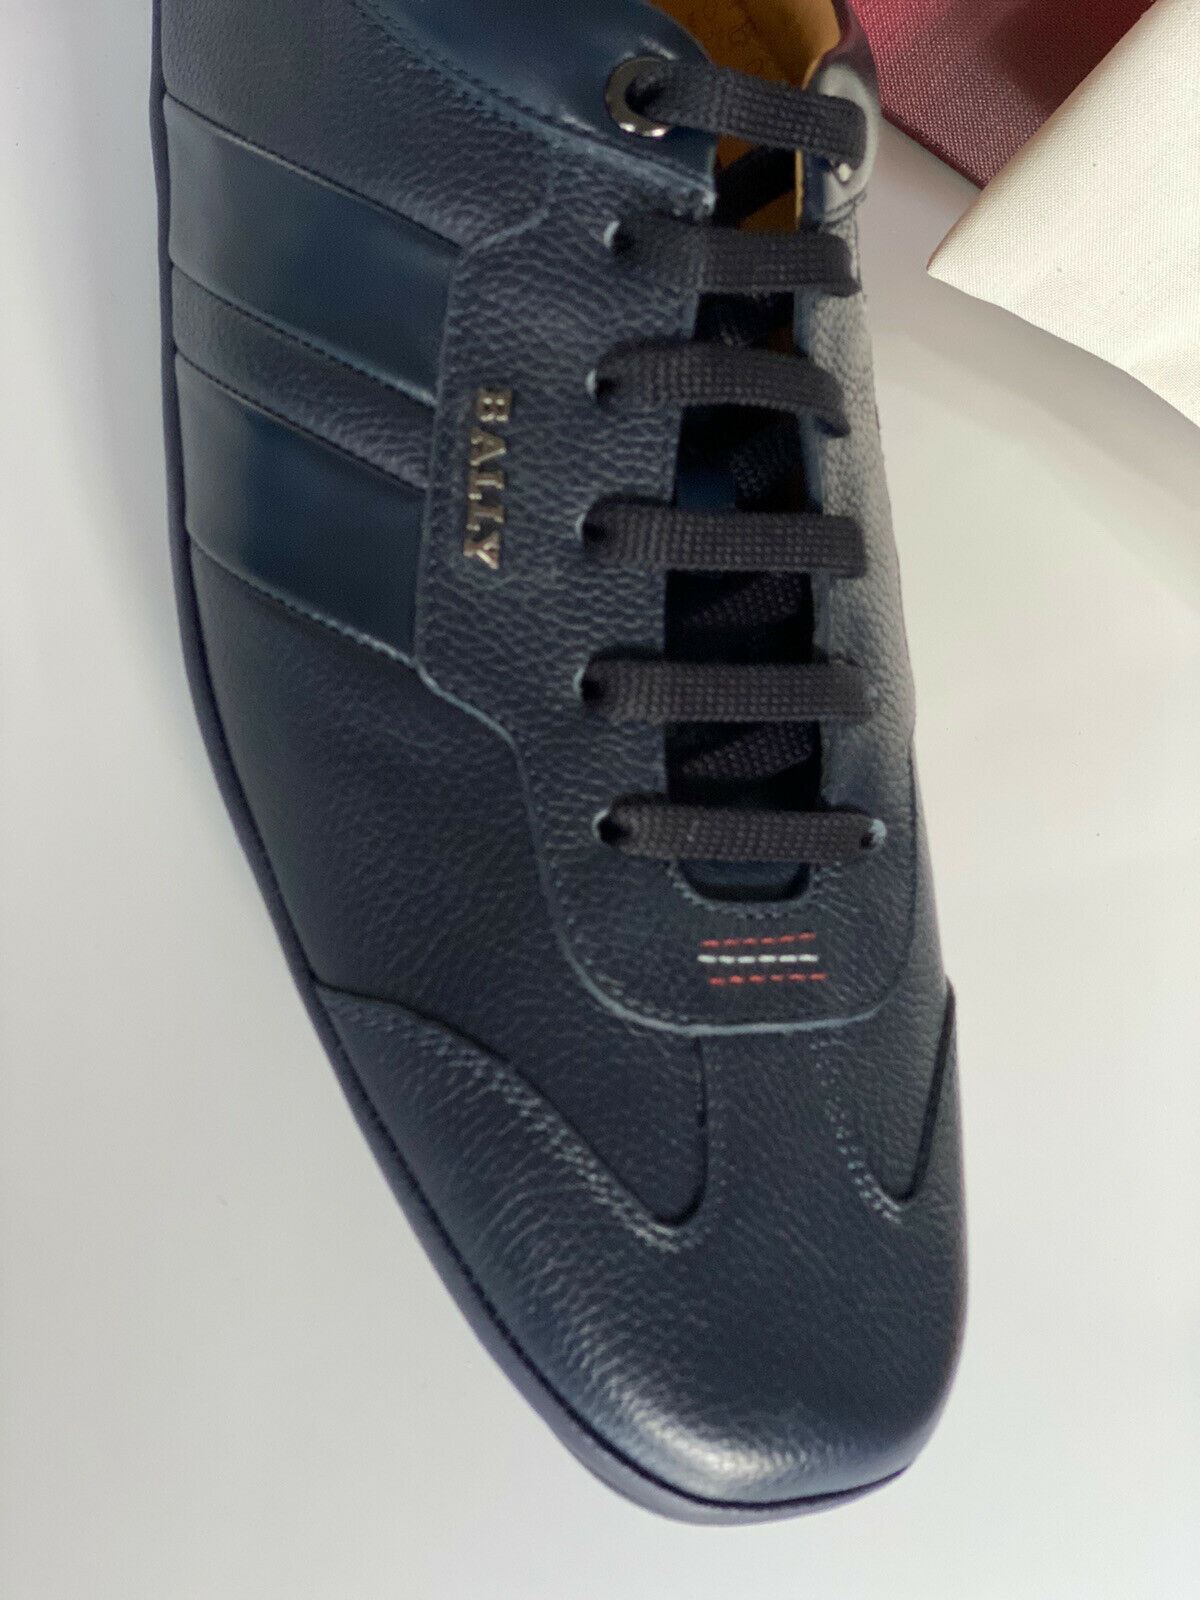 NIB Bally Primer Mens Bovine Embossed Leather Sneakers Blue 11 US 6234863 Italy